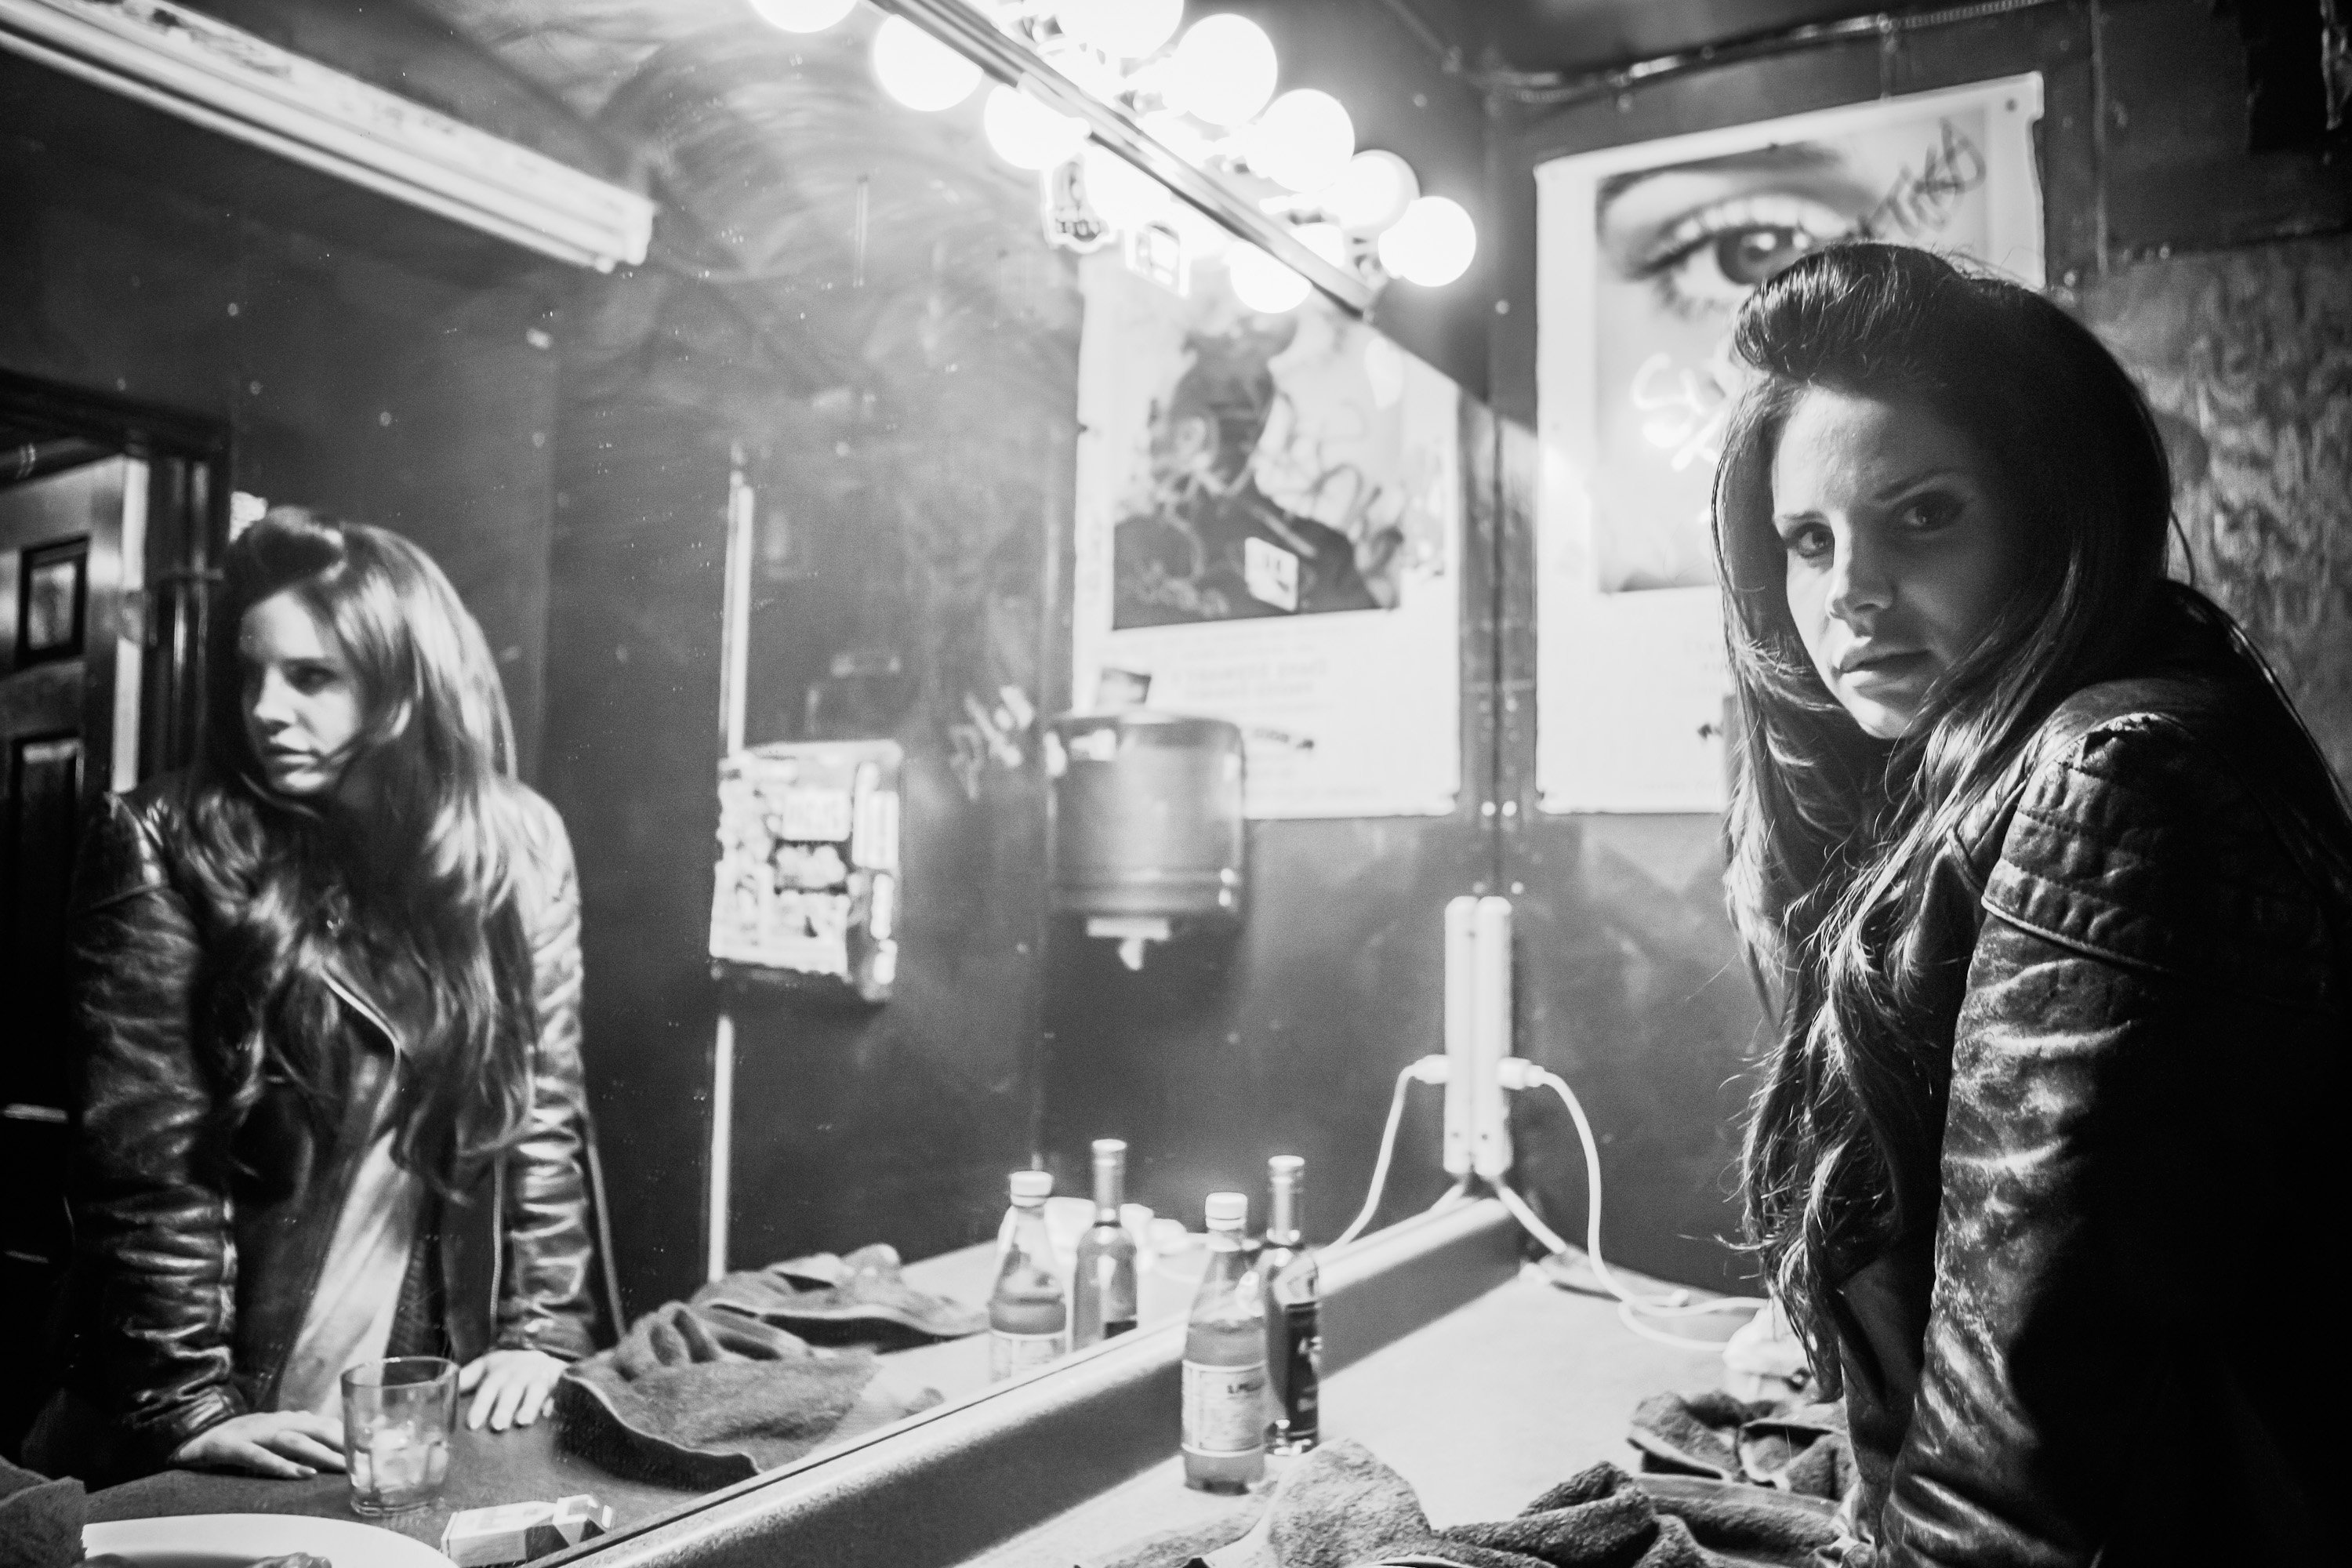 Lana Del Rey in front of a mirror